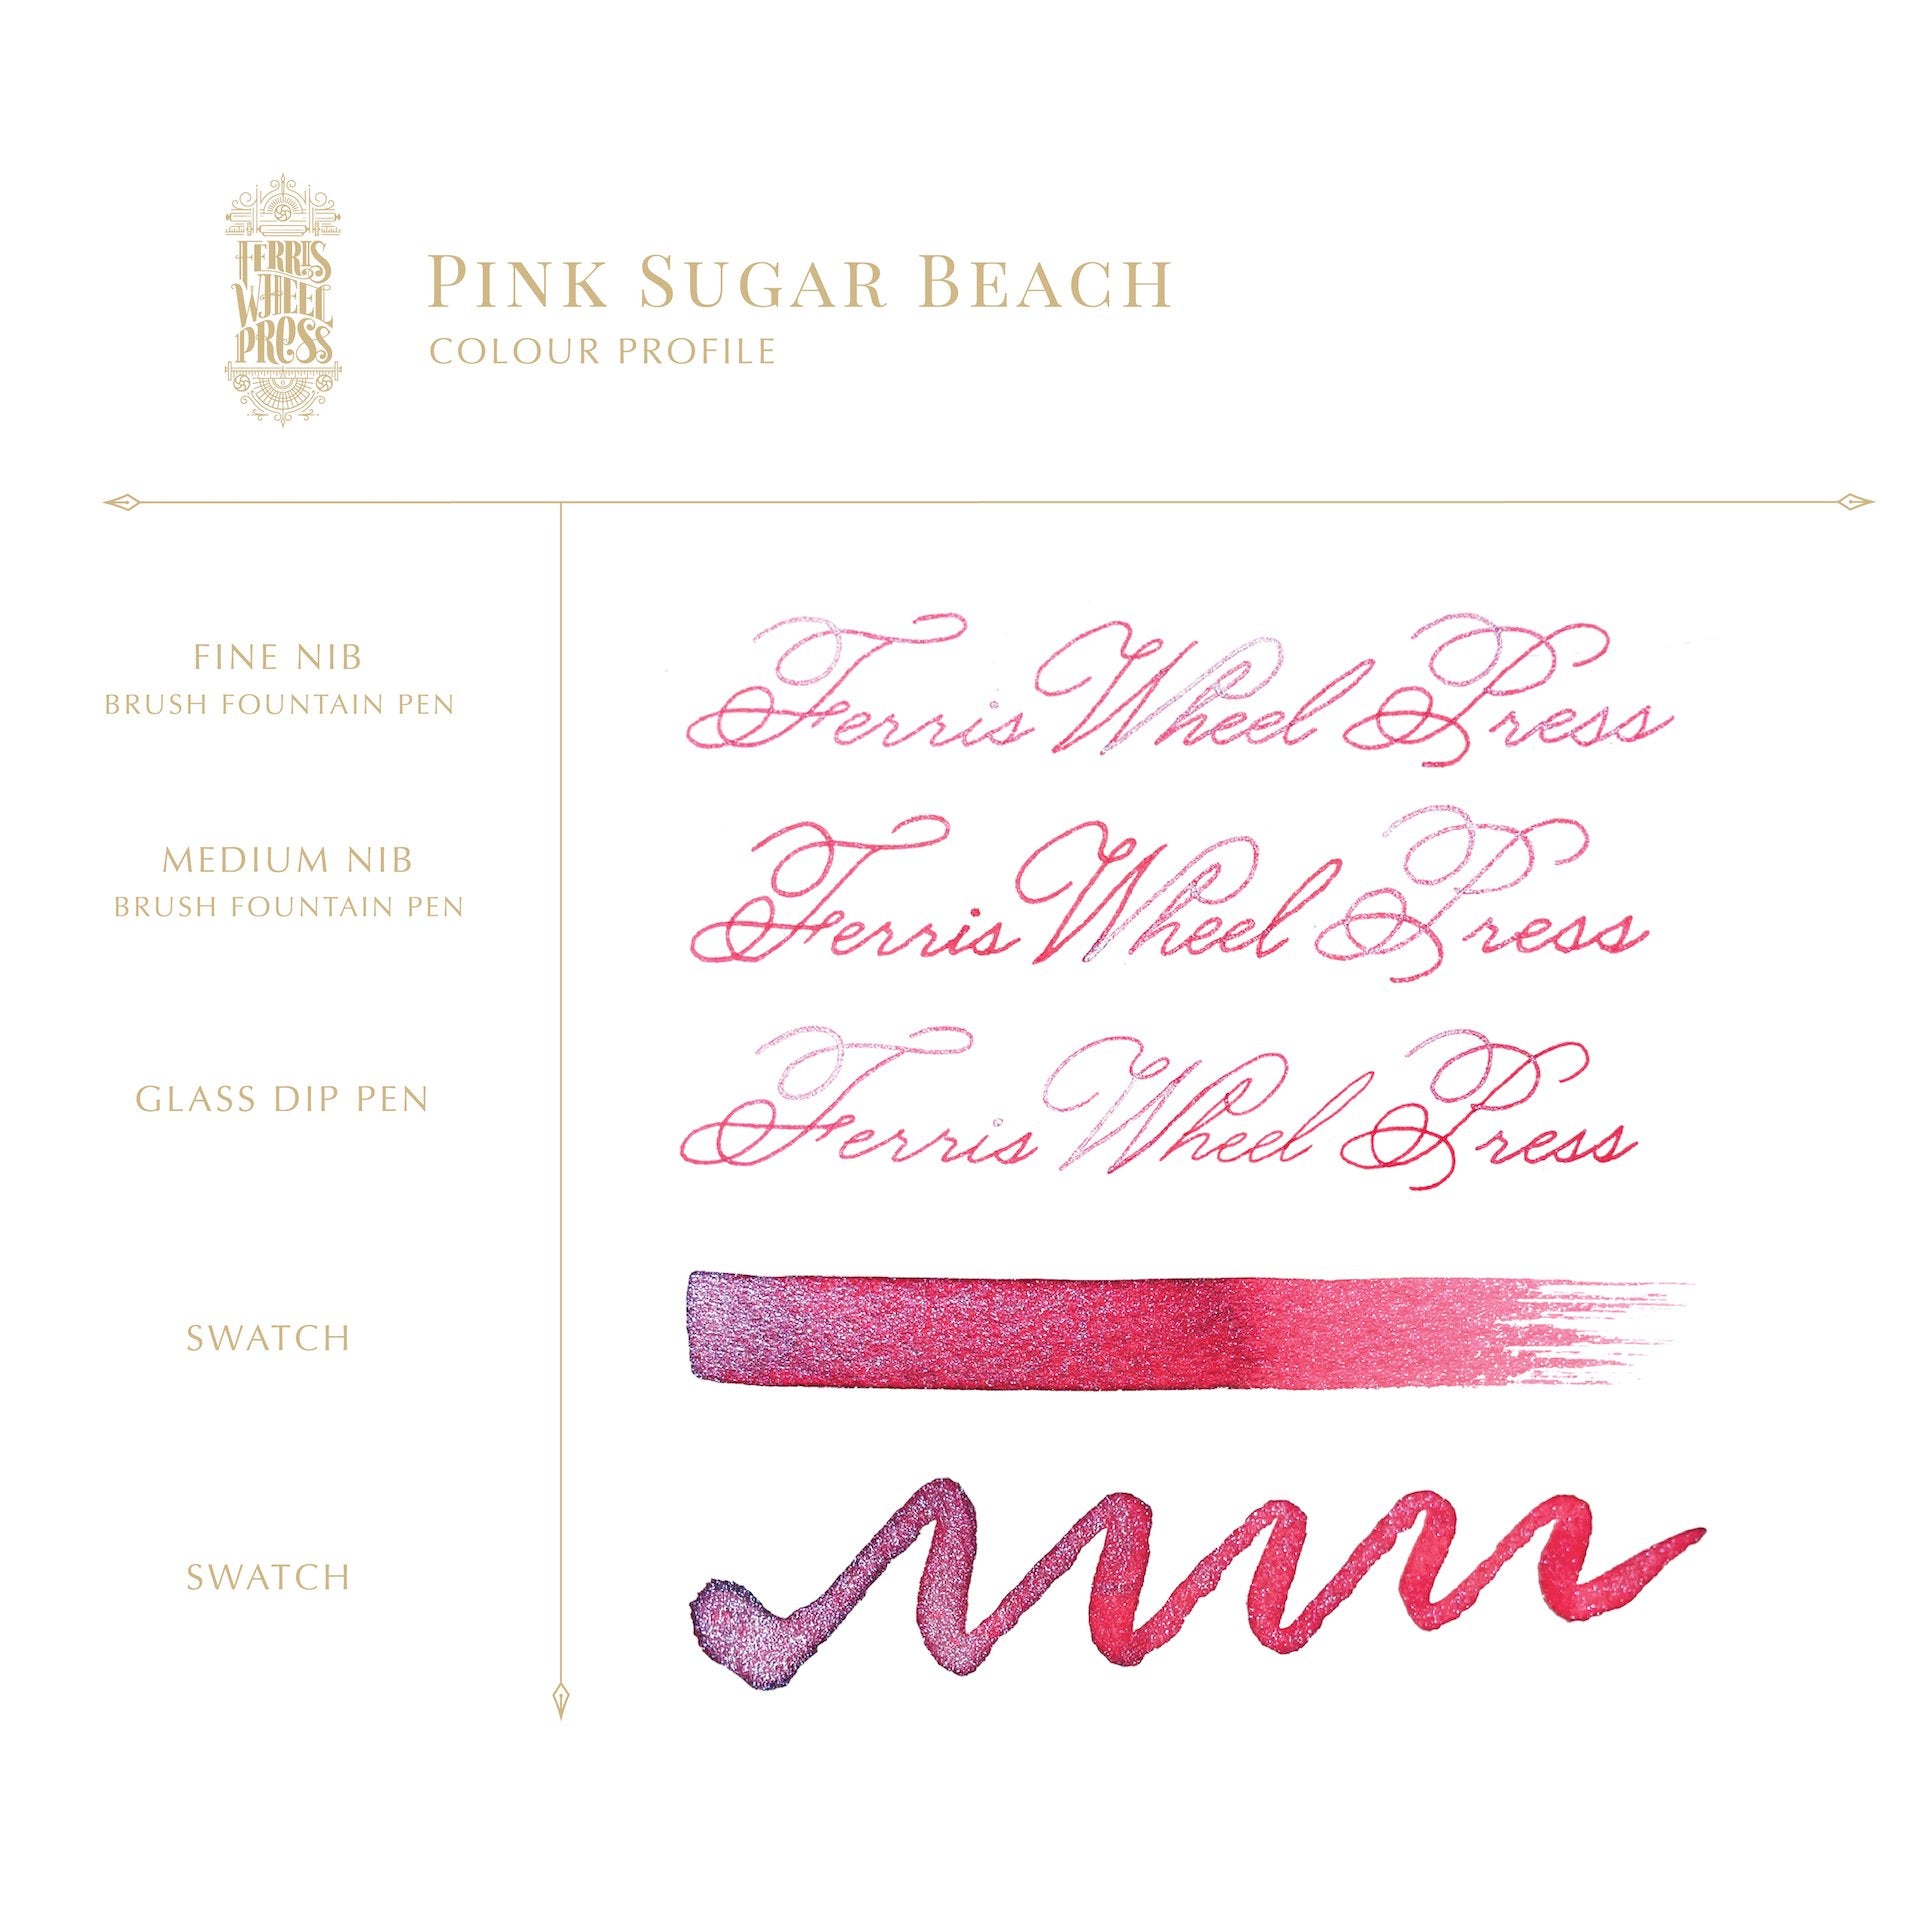 Encre pour stylo plume Ferris Wheel Press | Sugar Beach en Rose - Ferris Wheel Press - millenotes